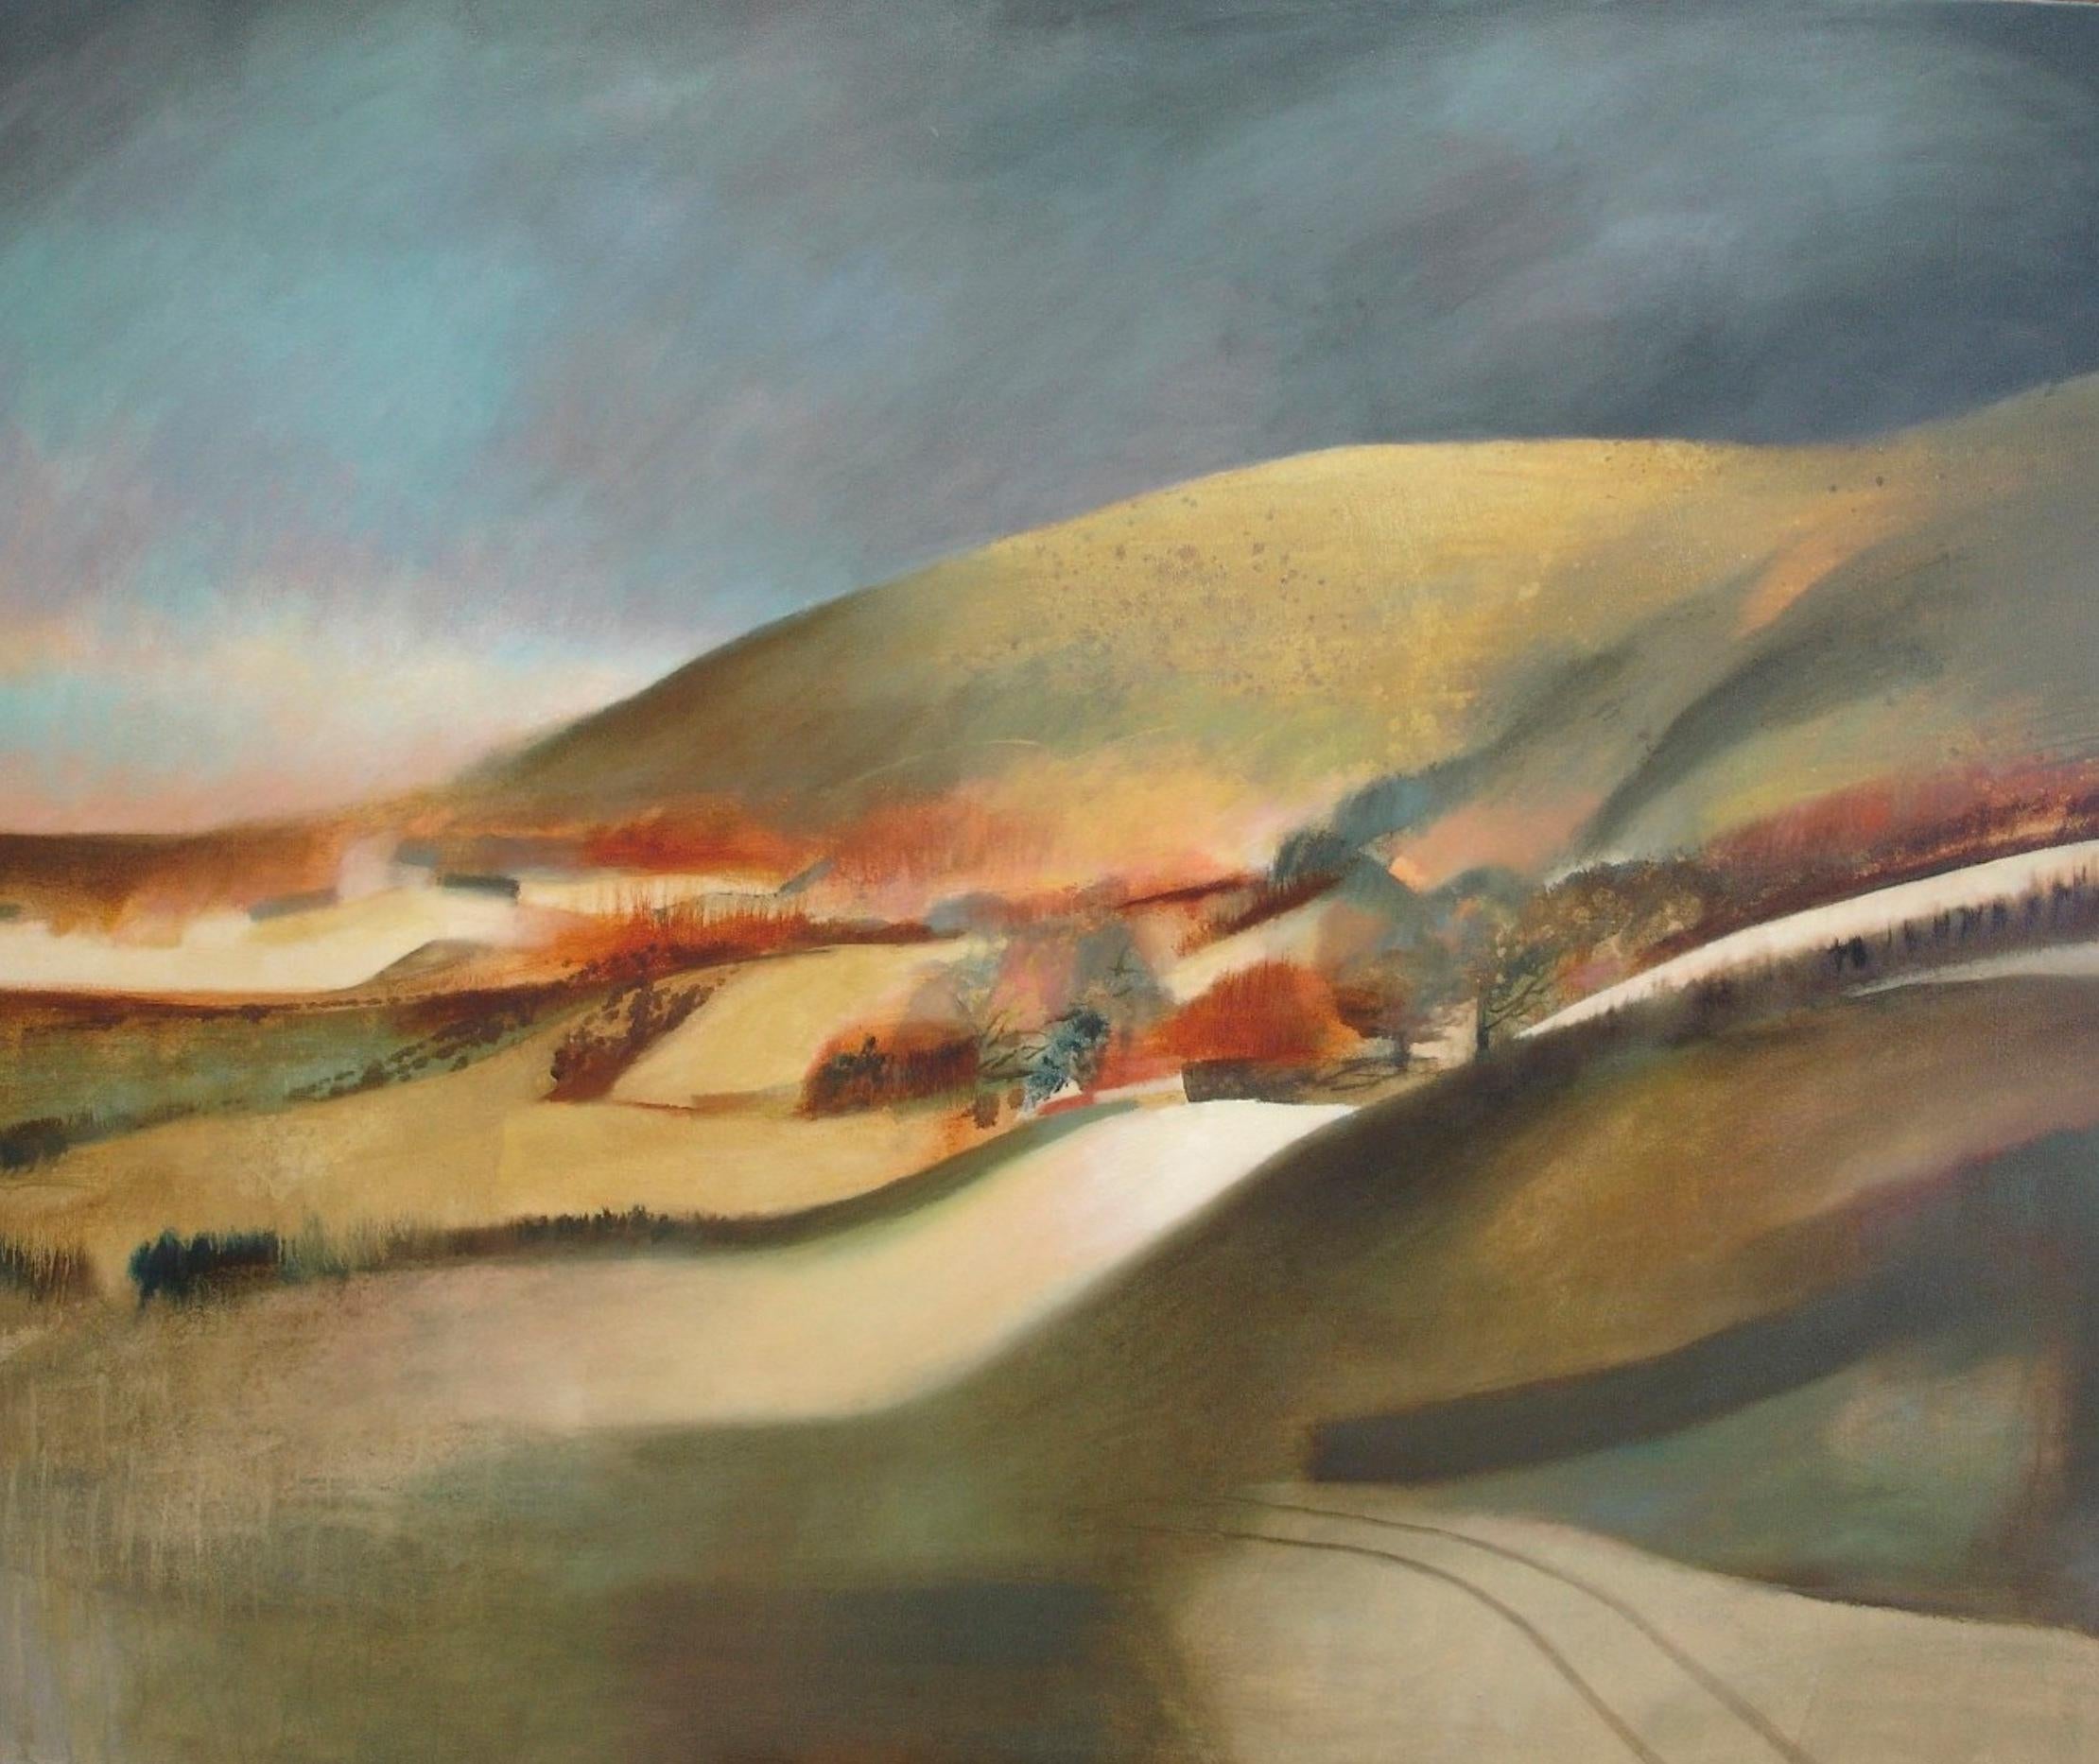 Edge, Somerset UK Landscape, Modern British Style Painting, Large Statement Art